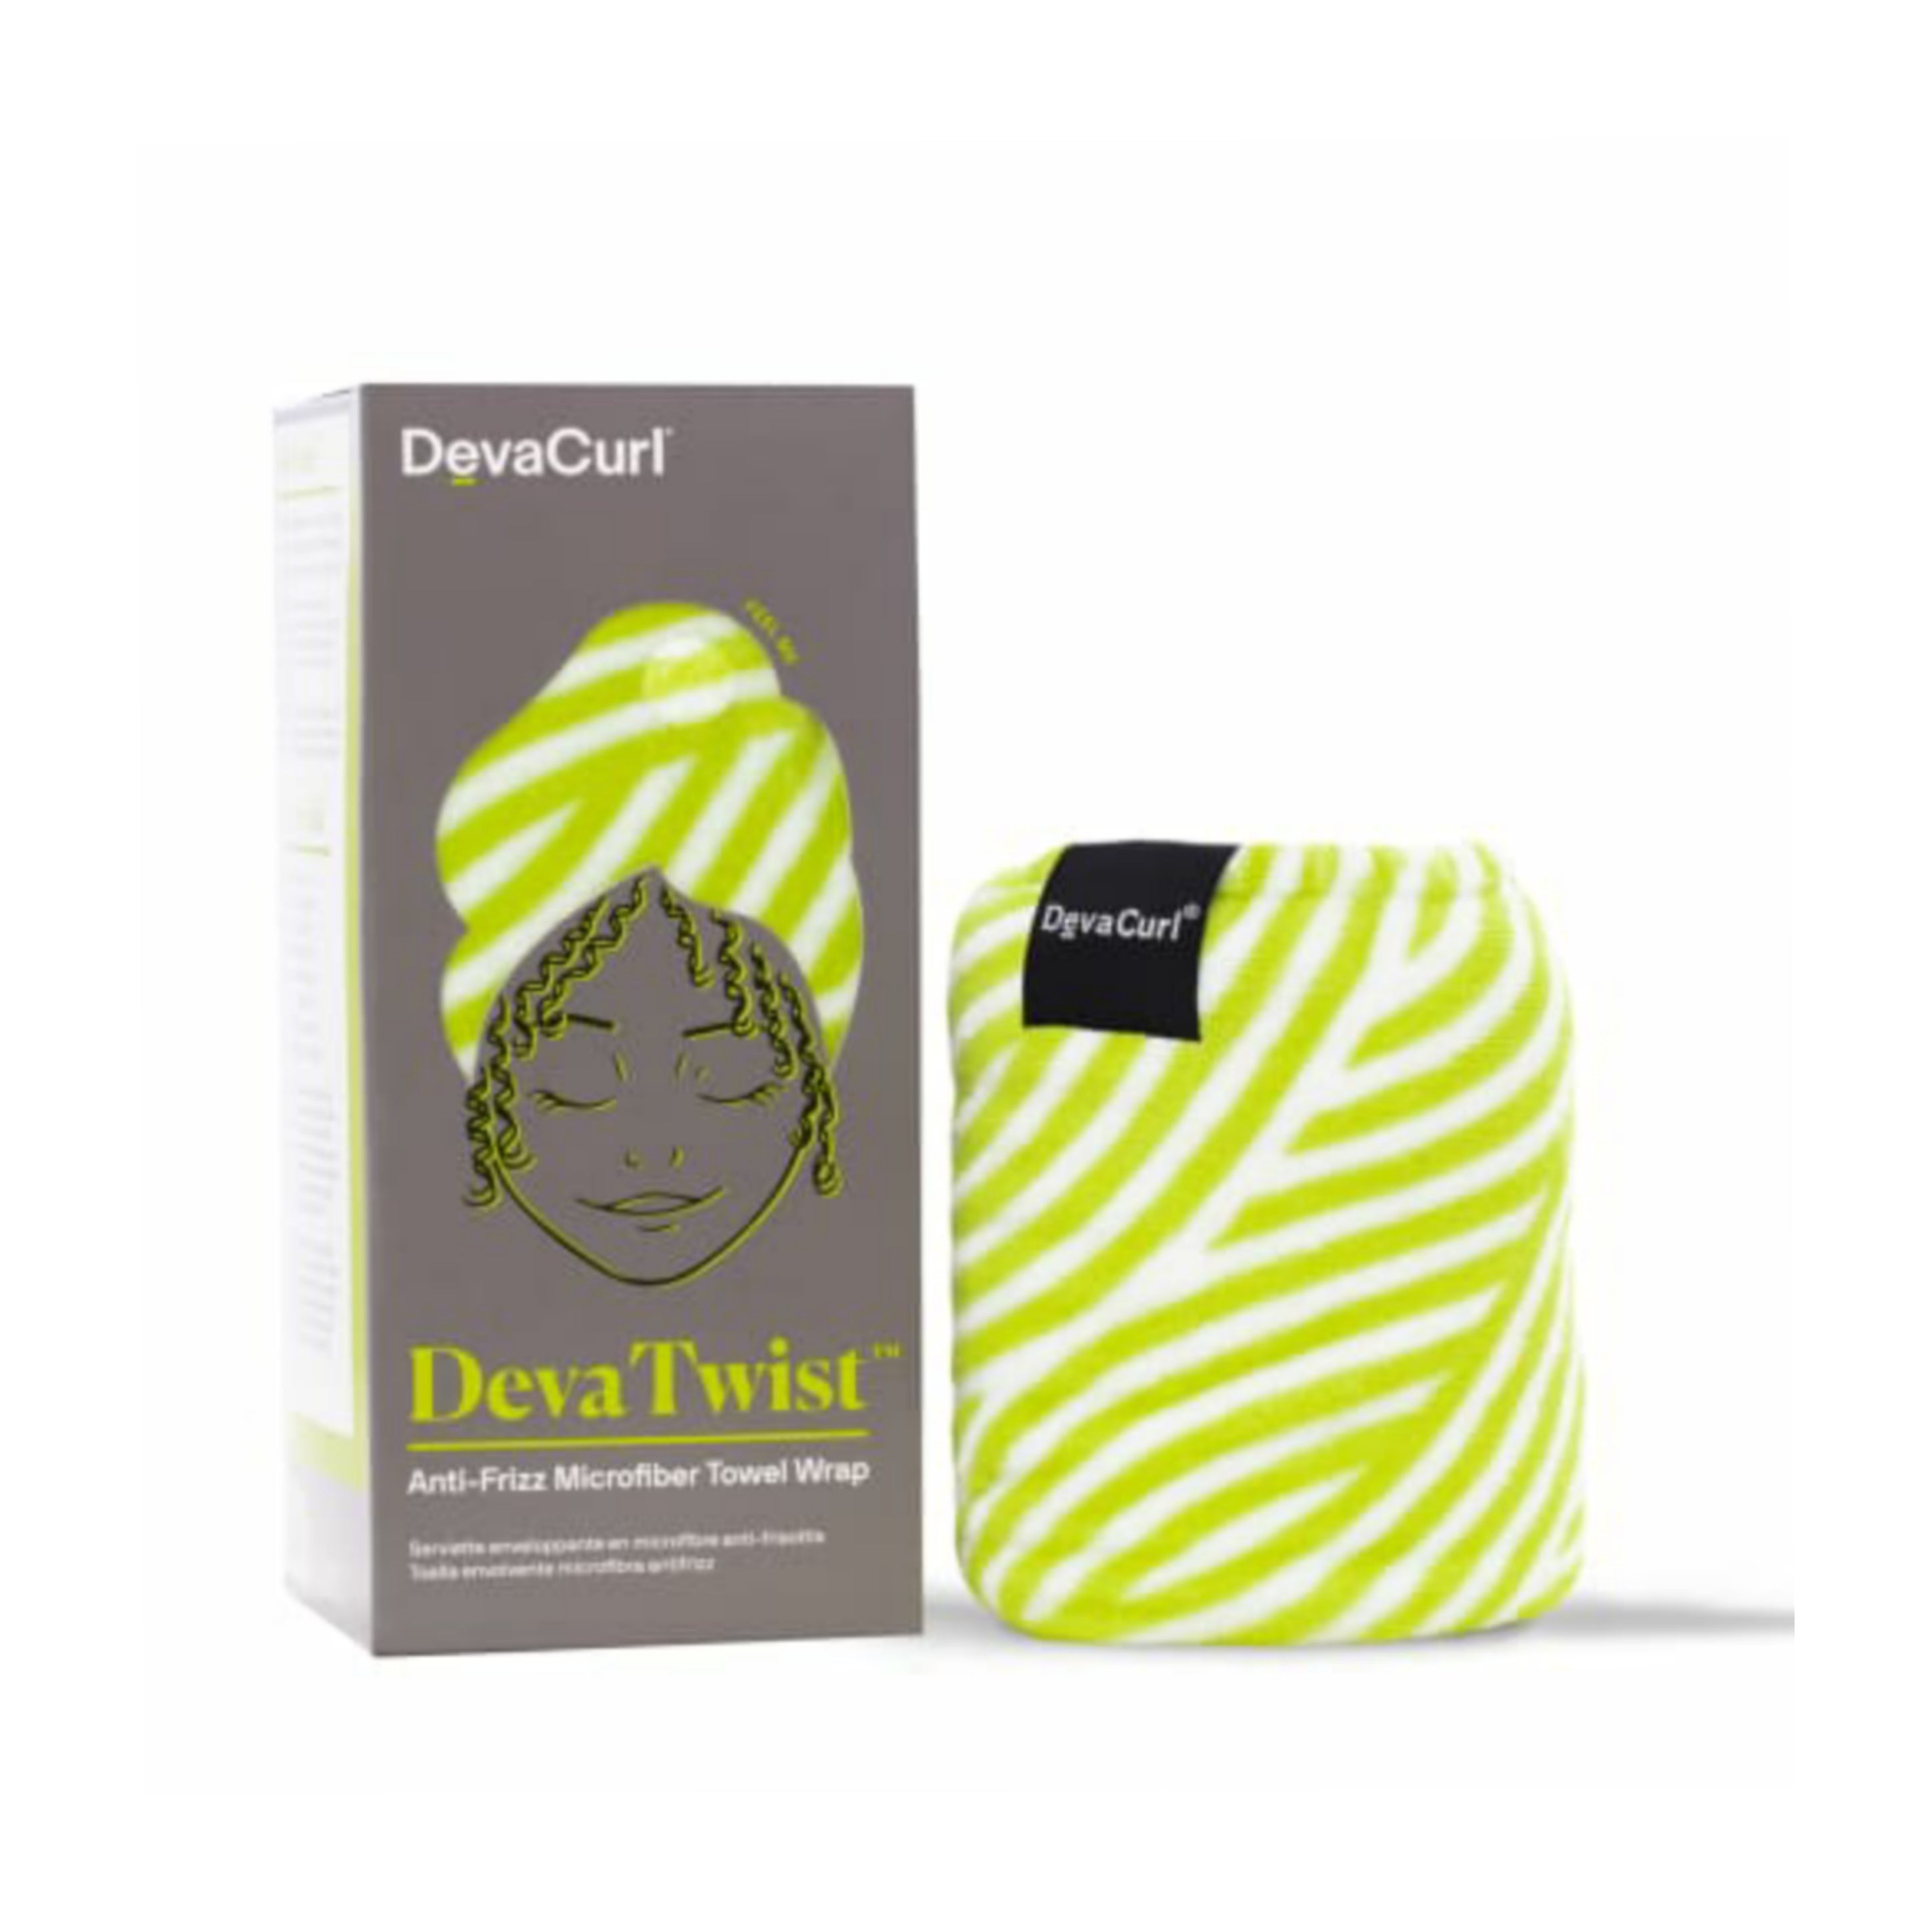 DevaCurl DevaTwist Anti-Frizz Microfiber Towel Wrap